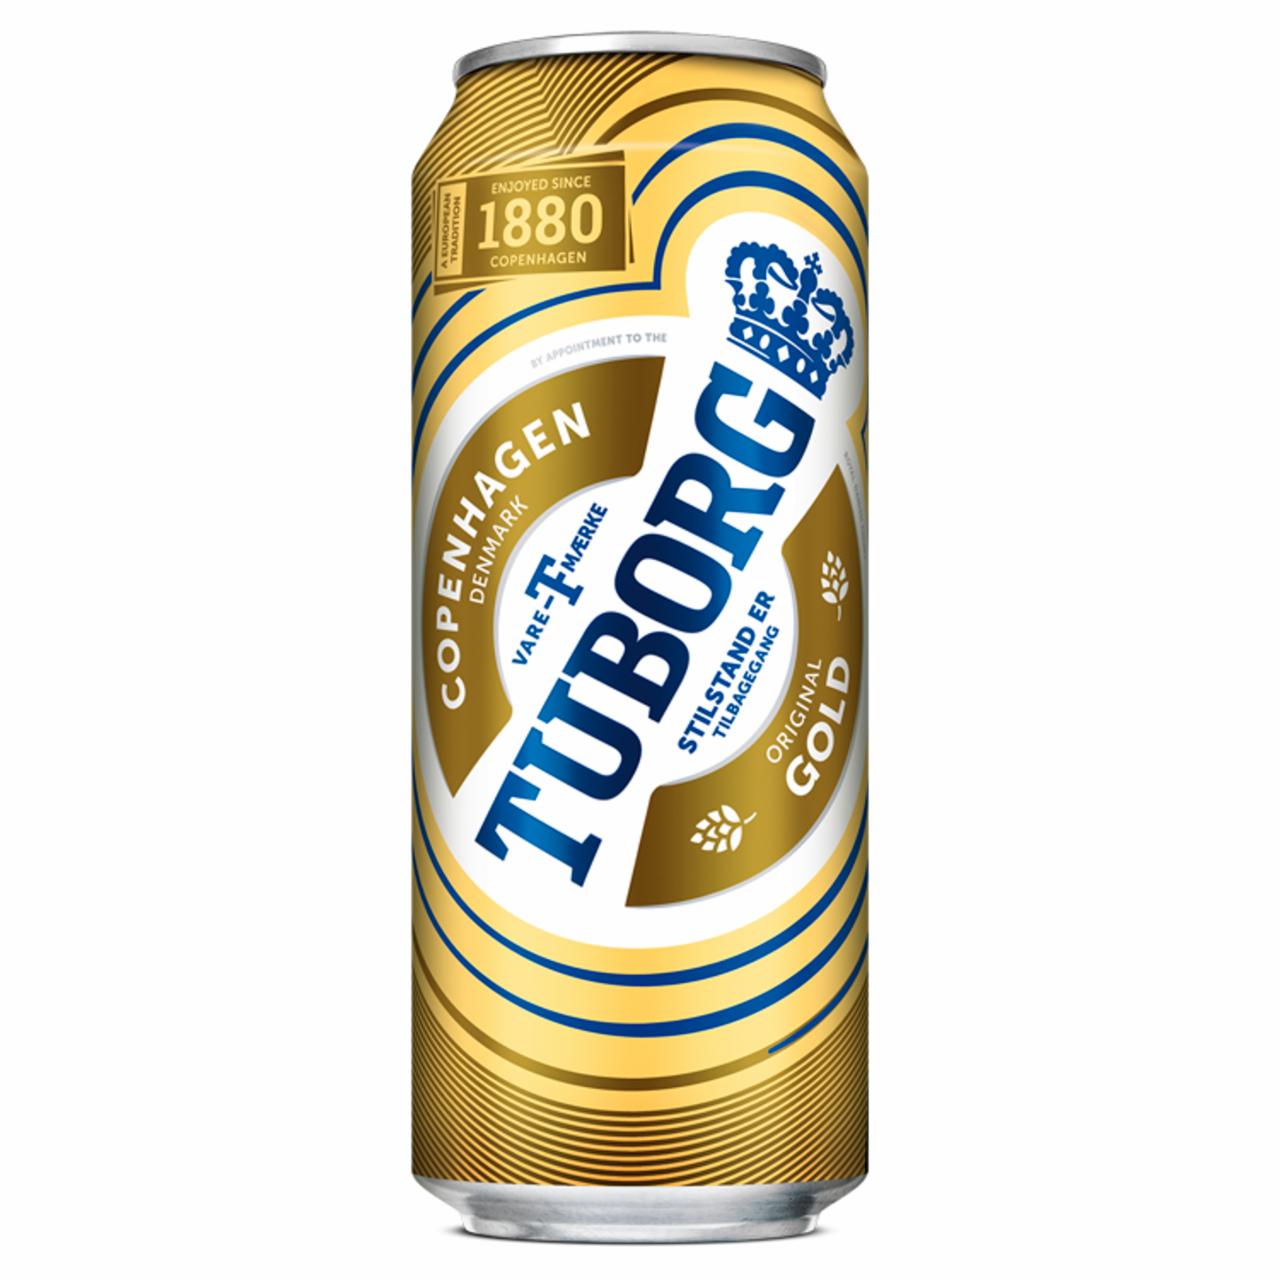 Képek - Tuborg Gold világos sör 5% 0,5 l